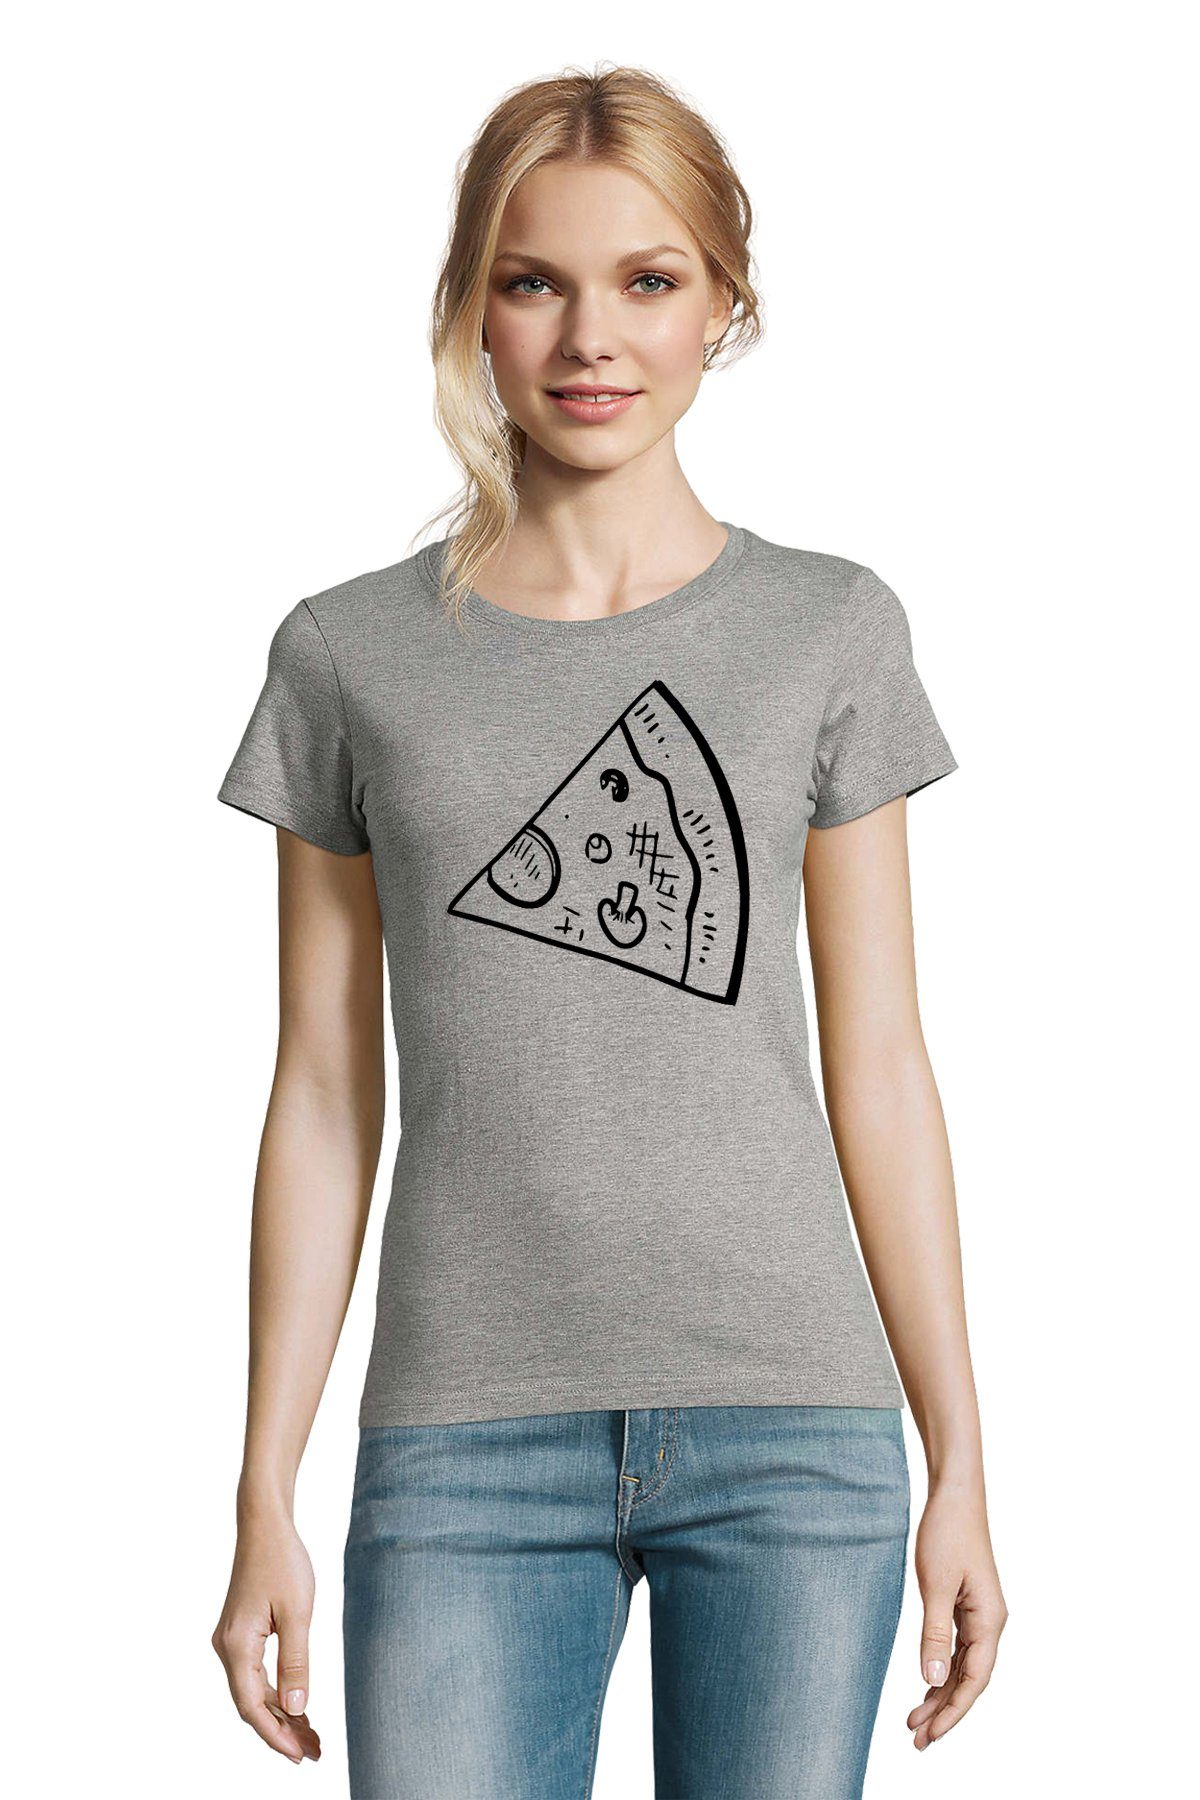 T-Shirt Shirt Pizza Pärchen Damen Friends Partner & BFF Valentin Brownie Blondie Grau Stück